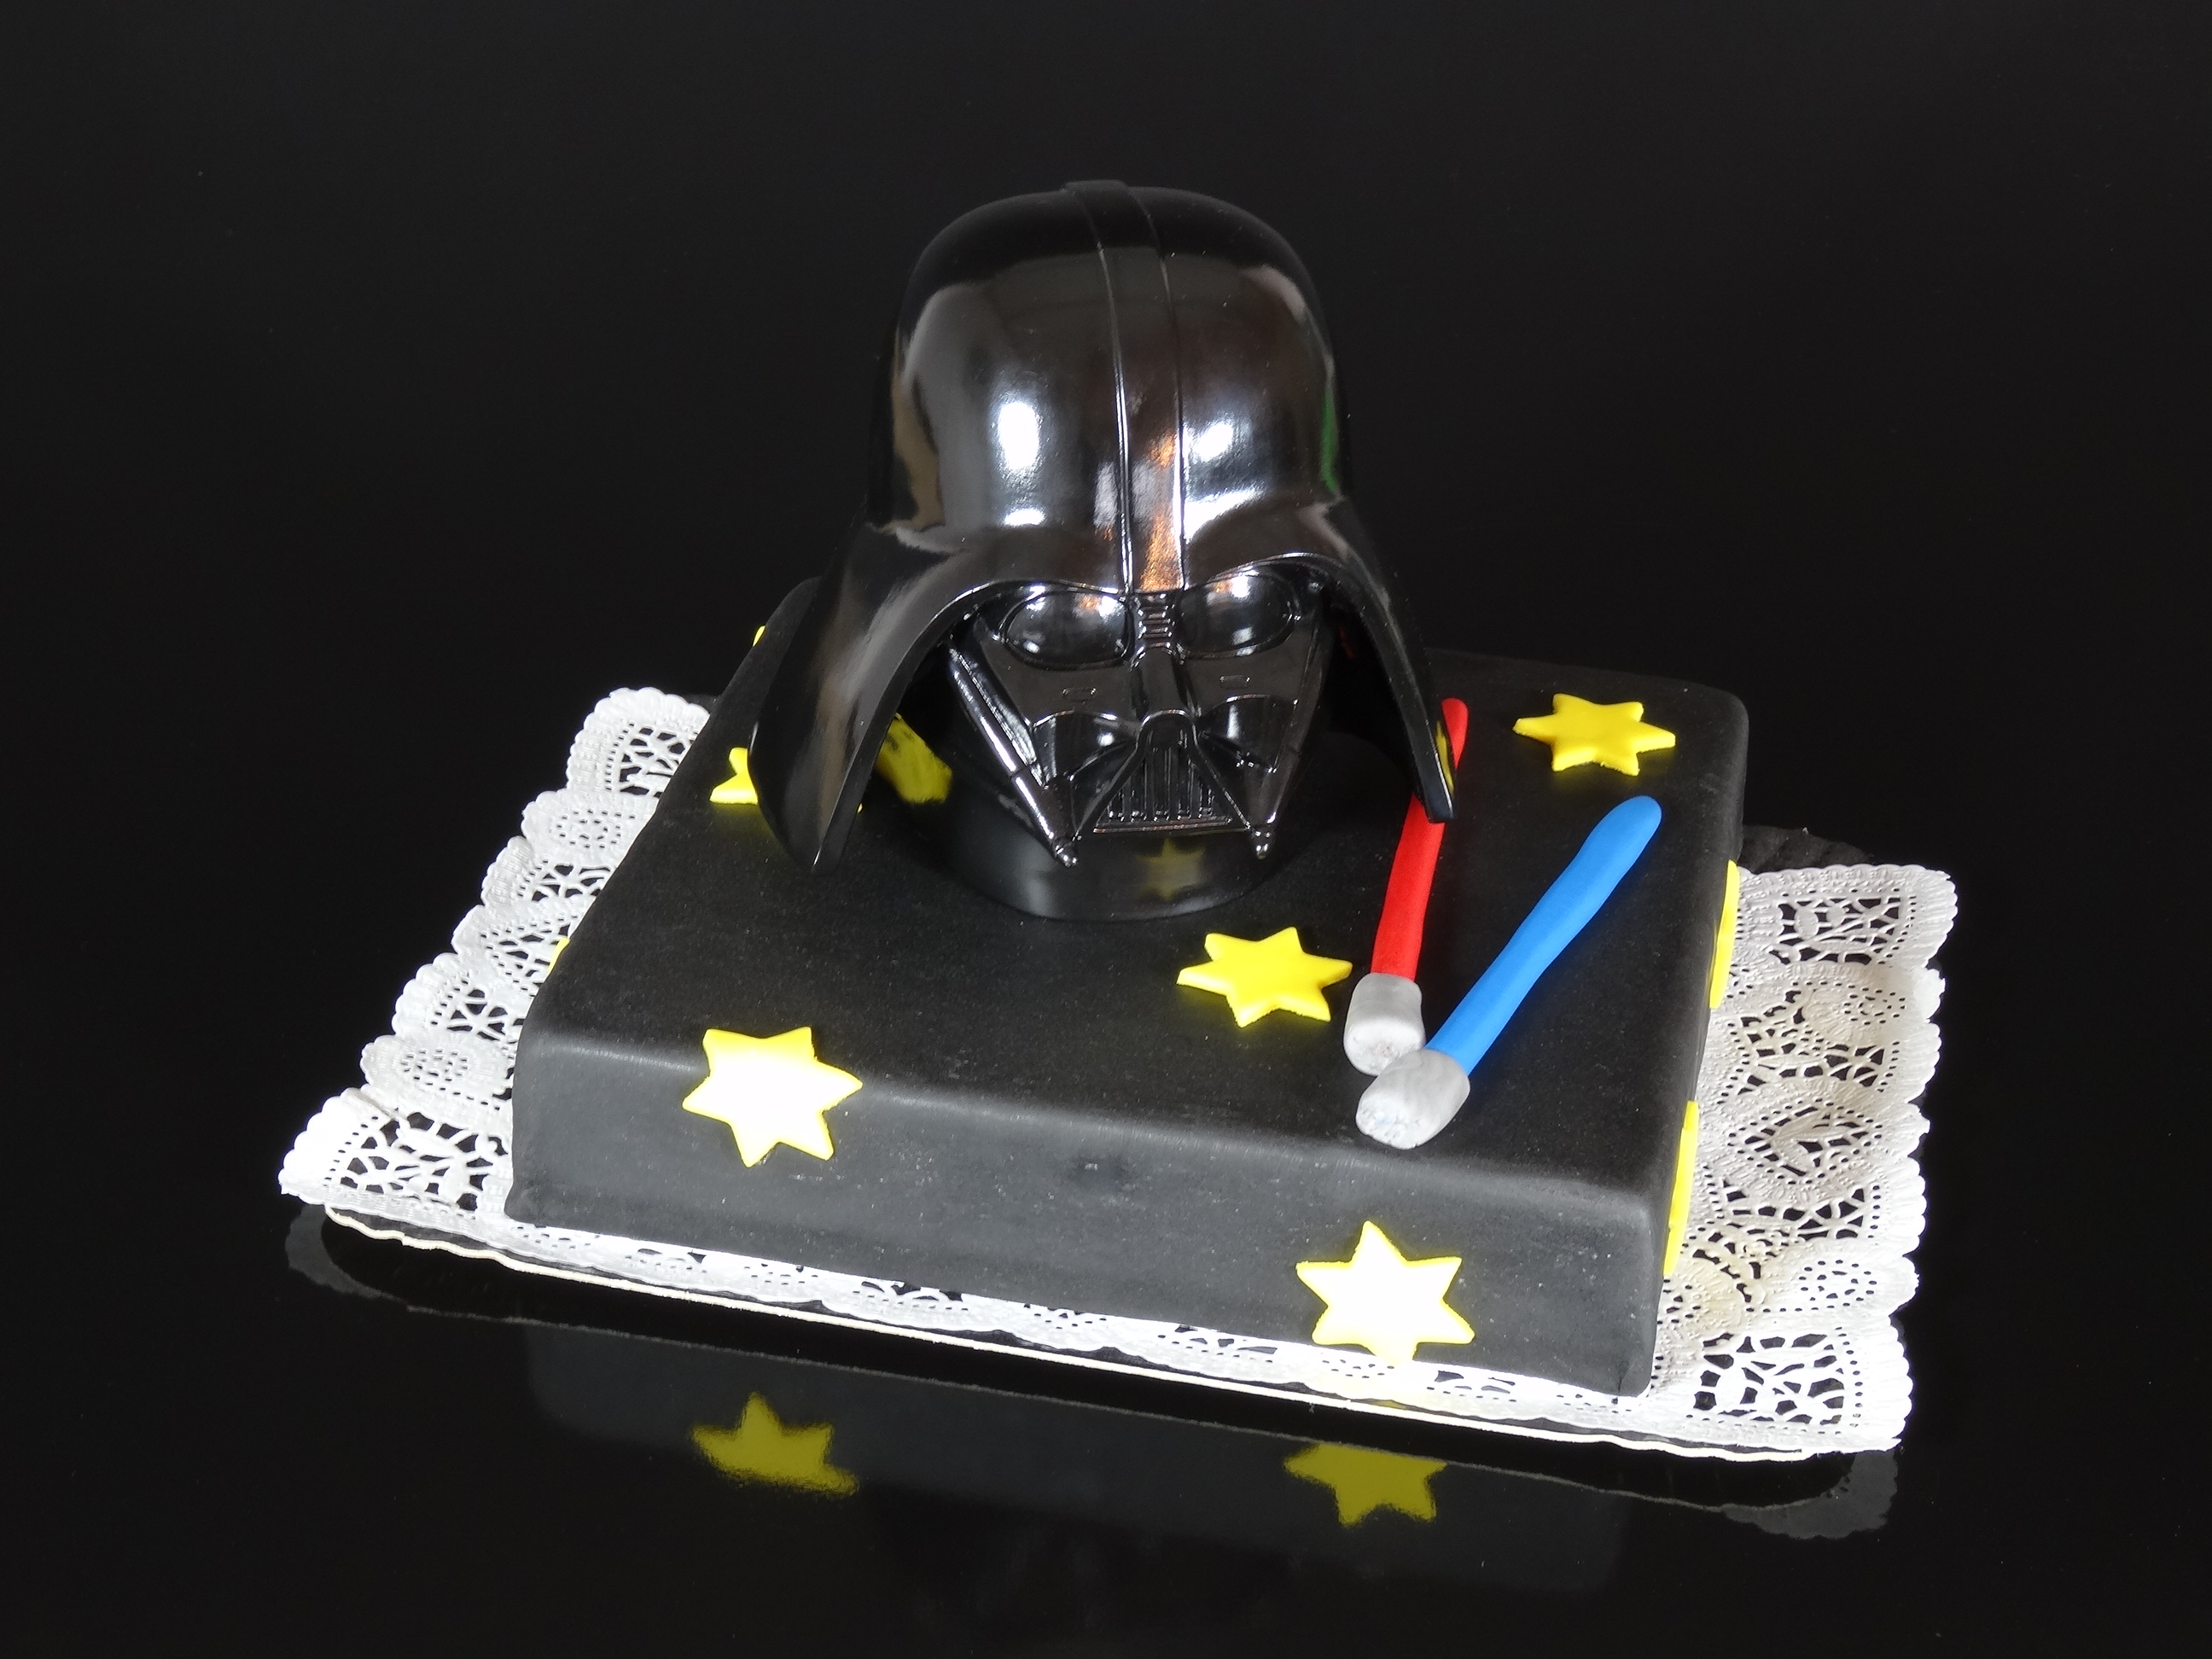 Starwars Sparkässeli-Torte